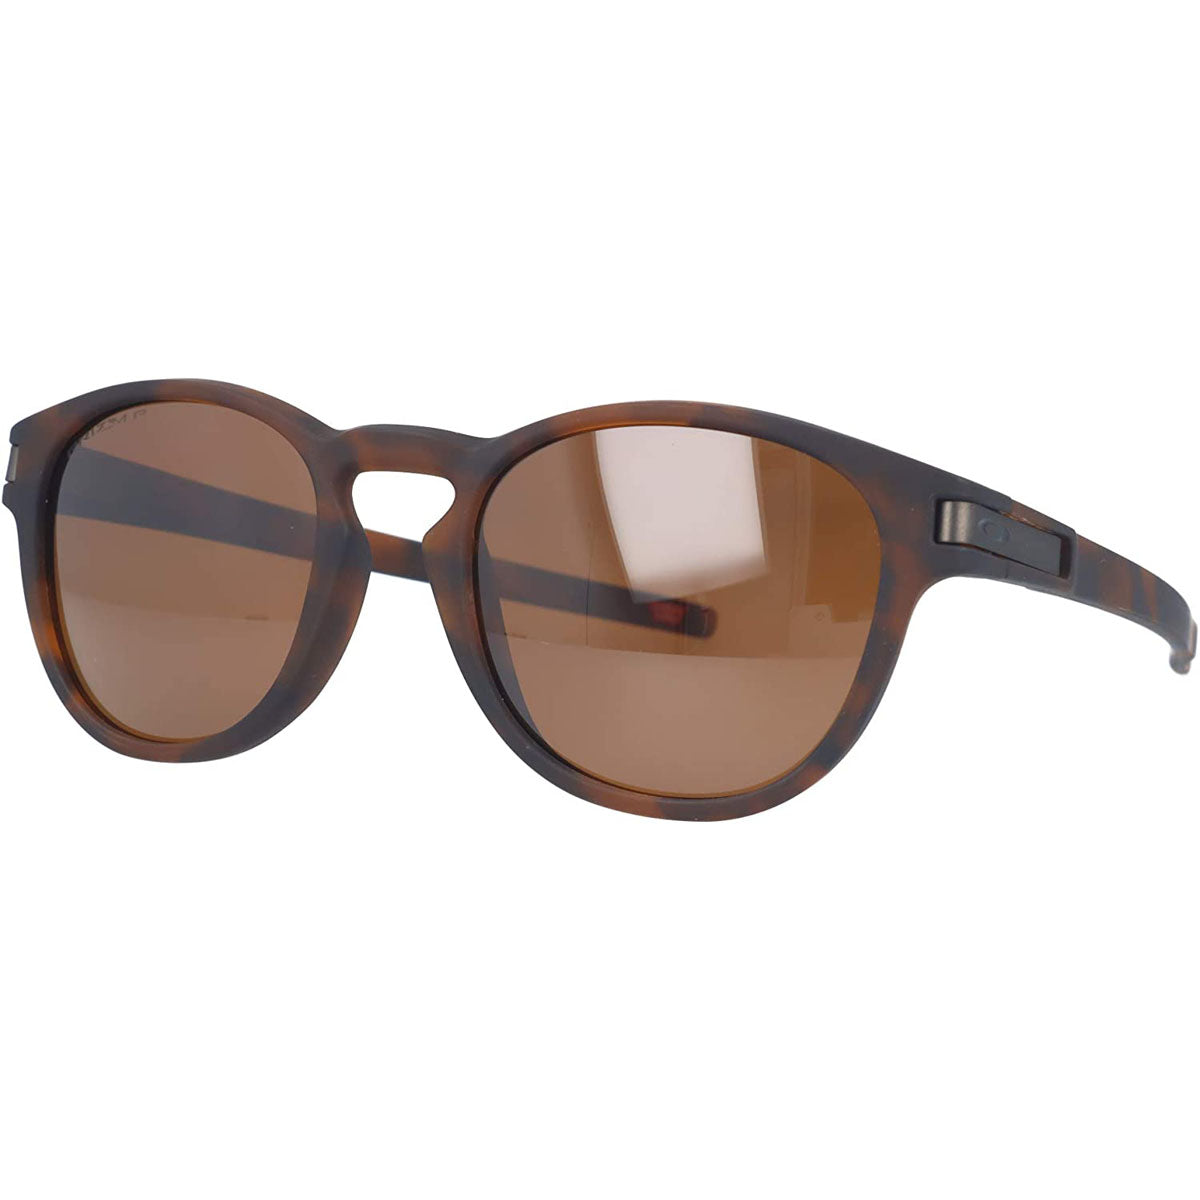 Oakley Latch Sunglasses - Matte Brown Tortoise / PRIZM Tungsten Iridium Polarized Lens - OO9349-2053